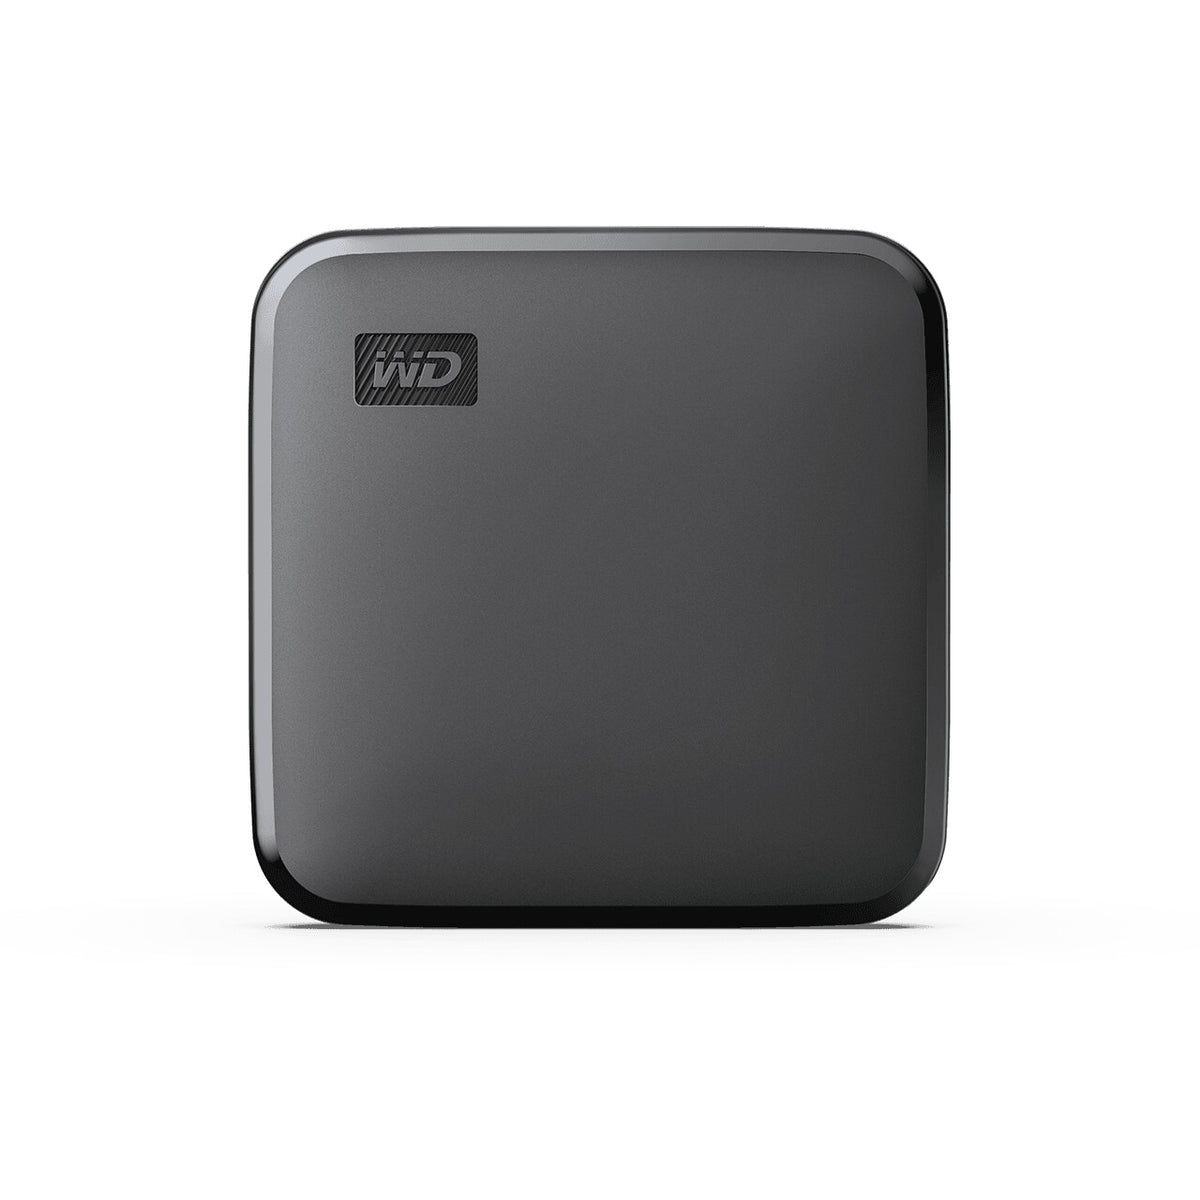 Western Digital External solid state drive in Black - 1 TB